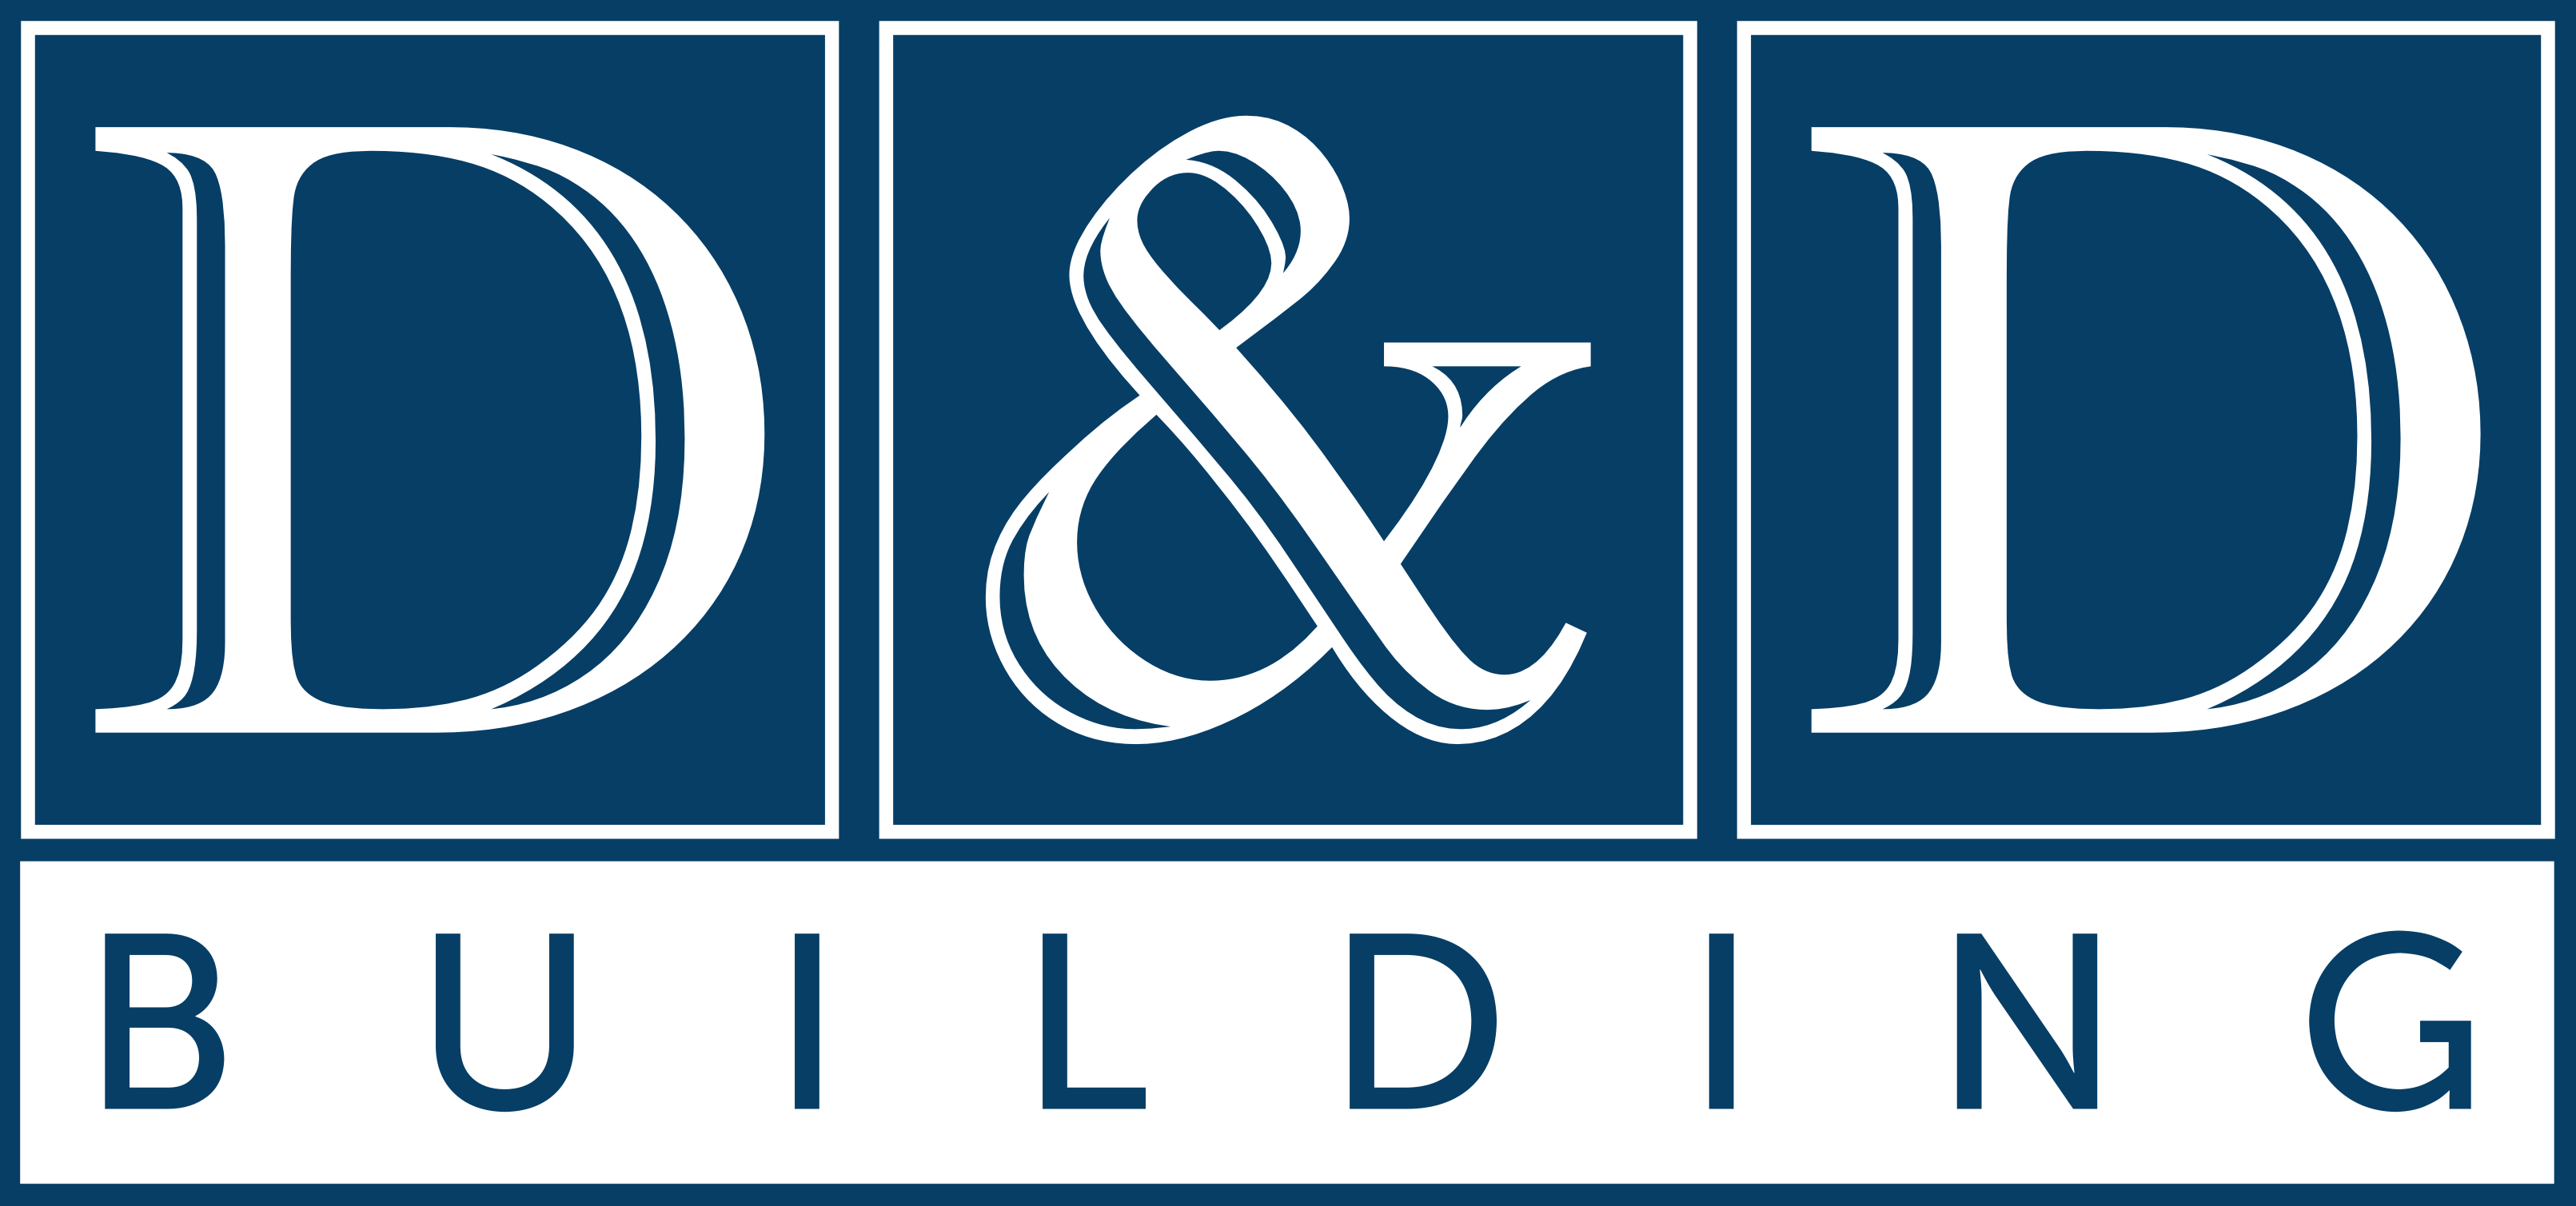 affiliate organization logo